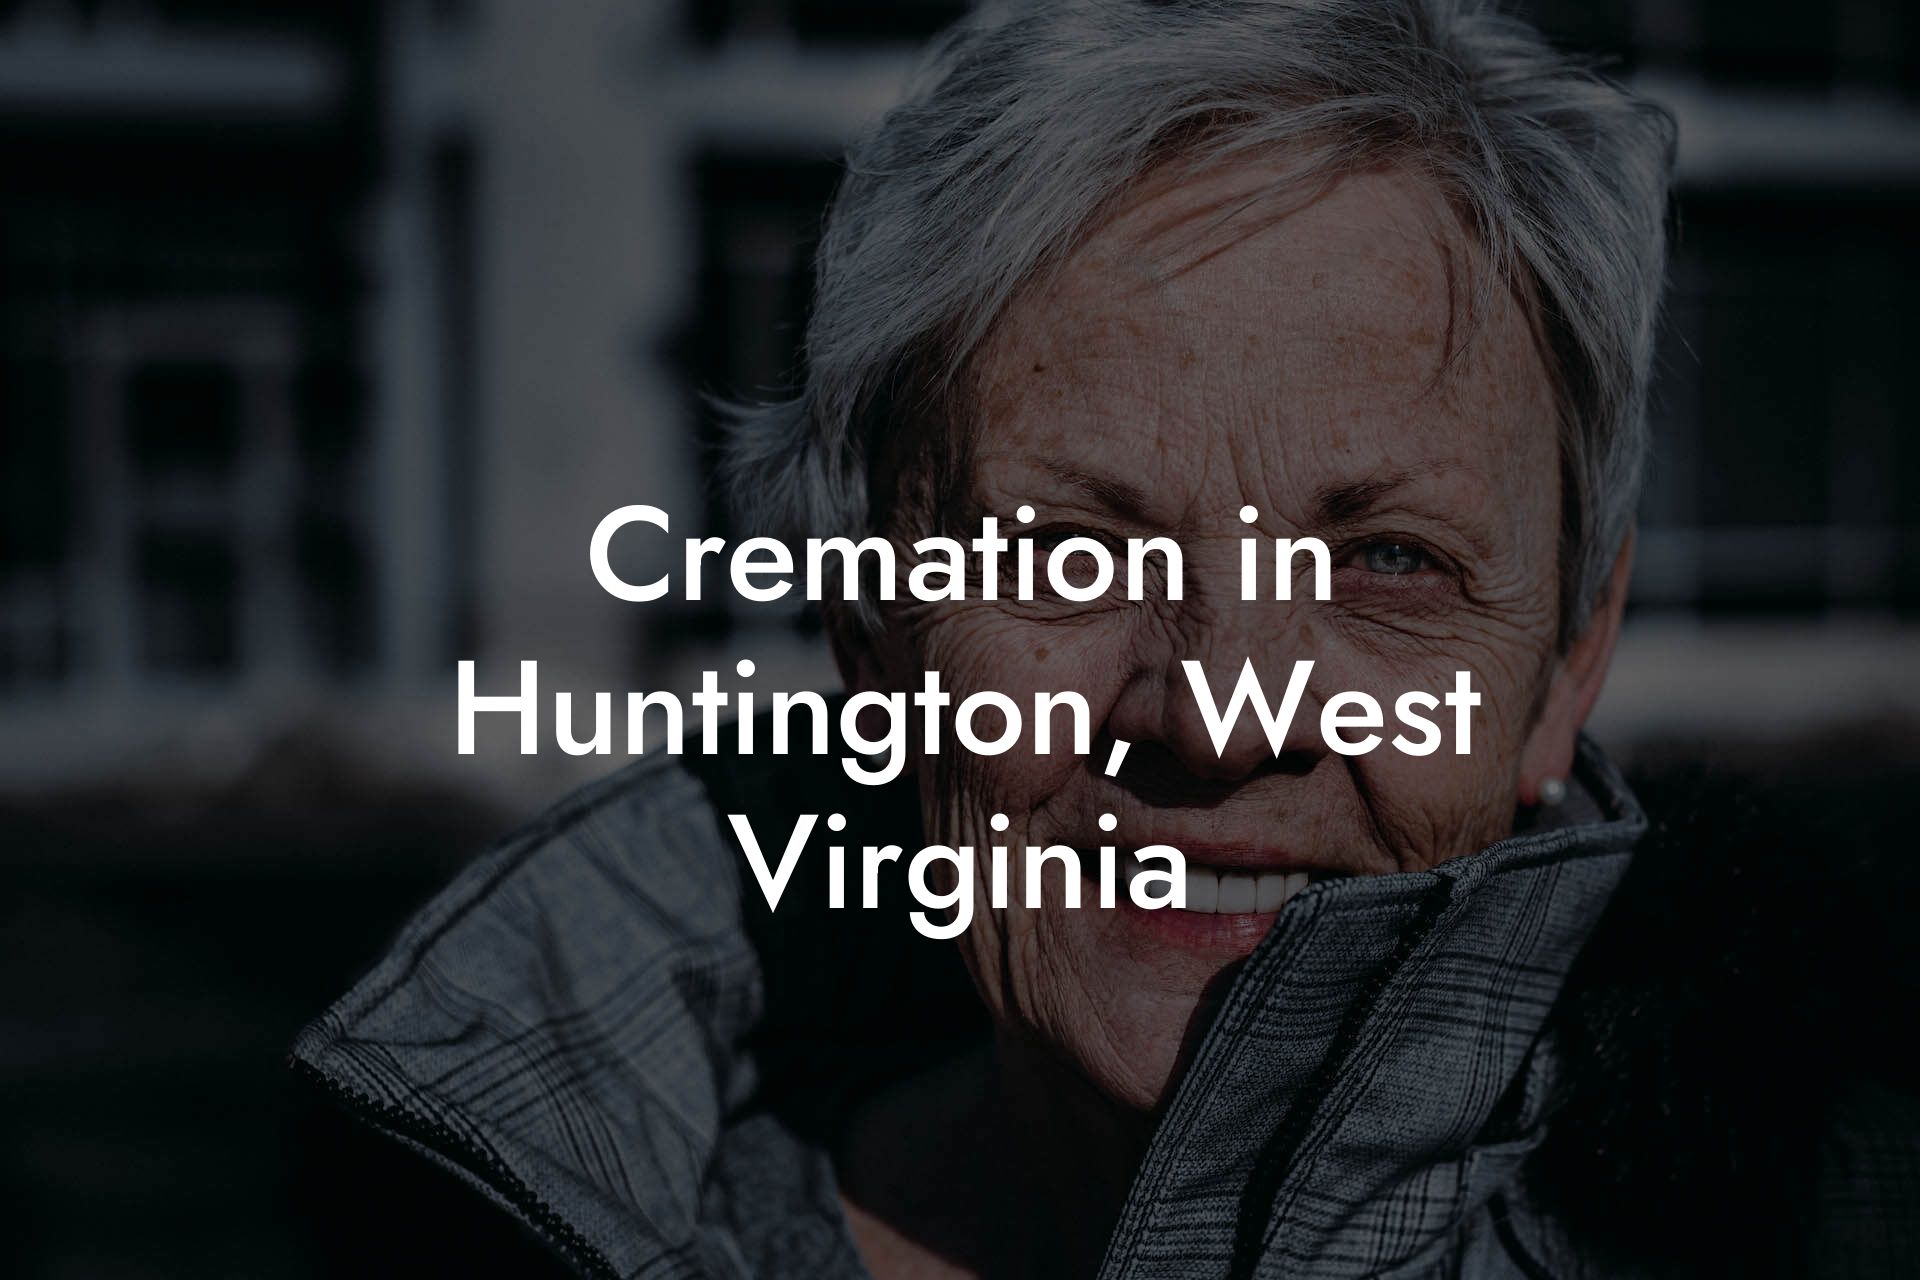 Cremation in Huntington, West Virginia